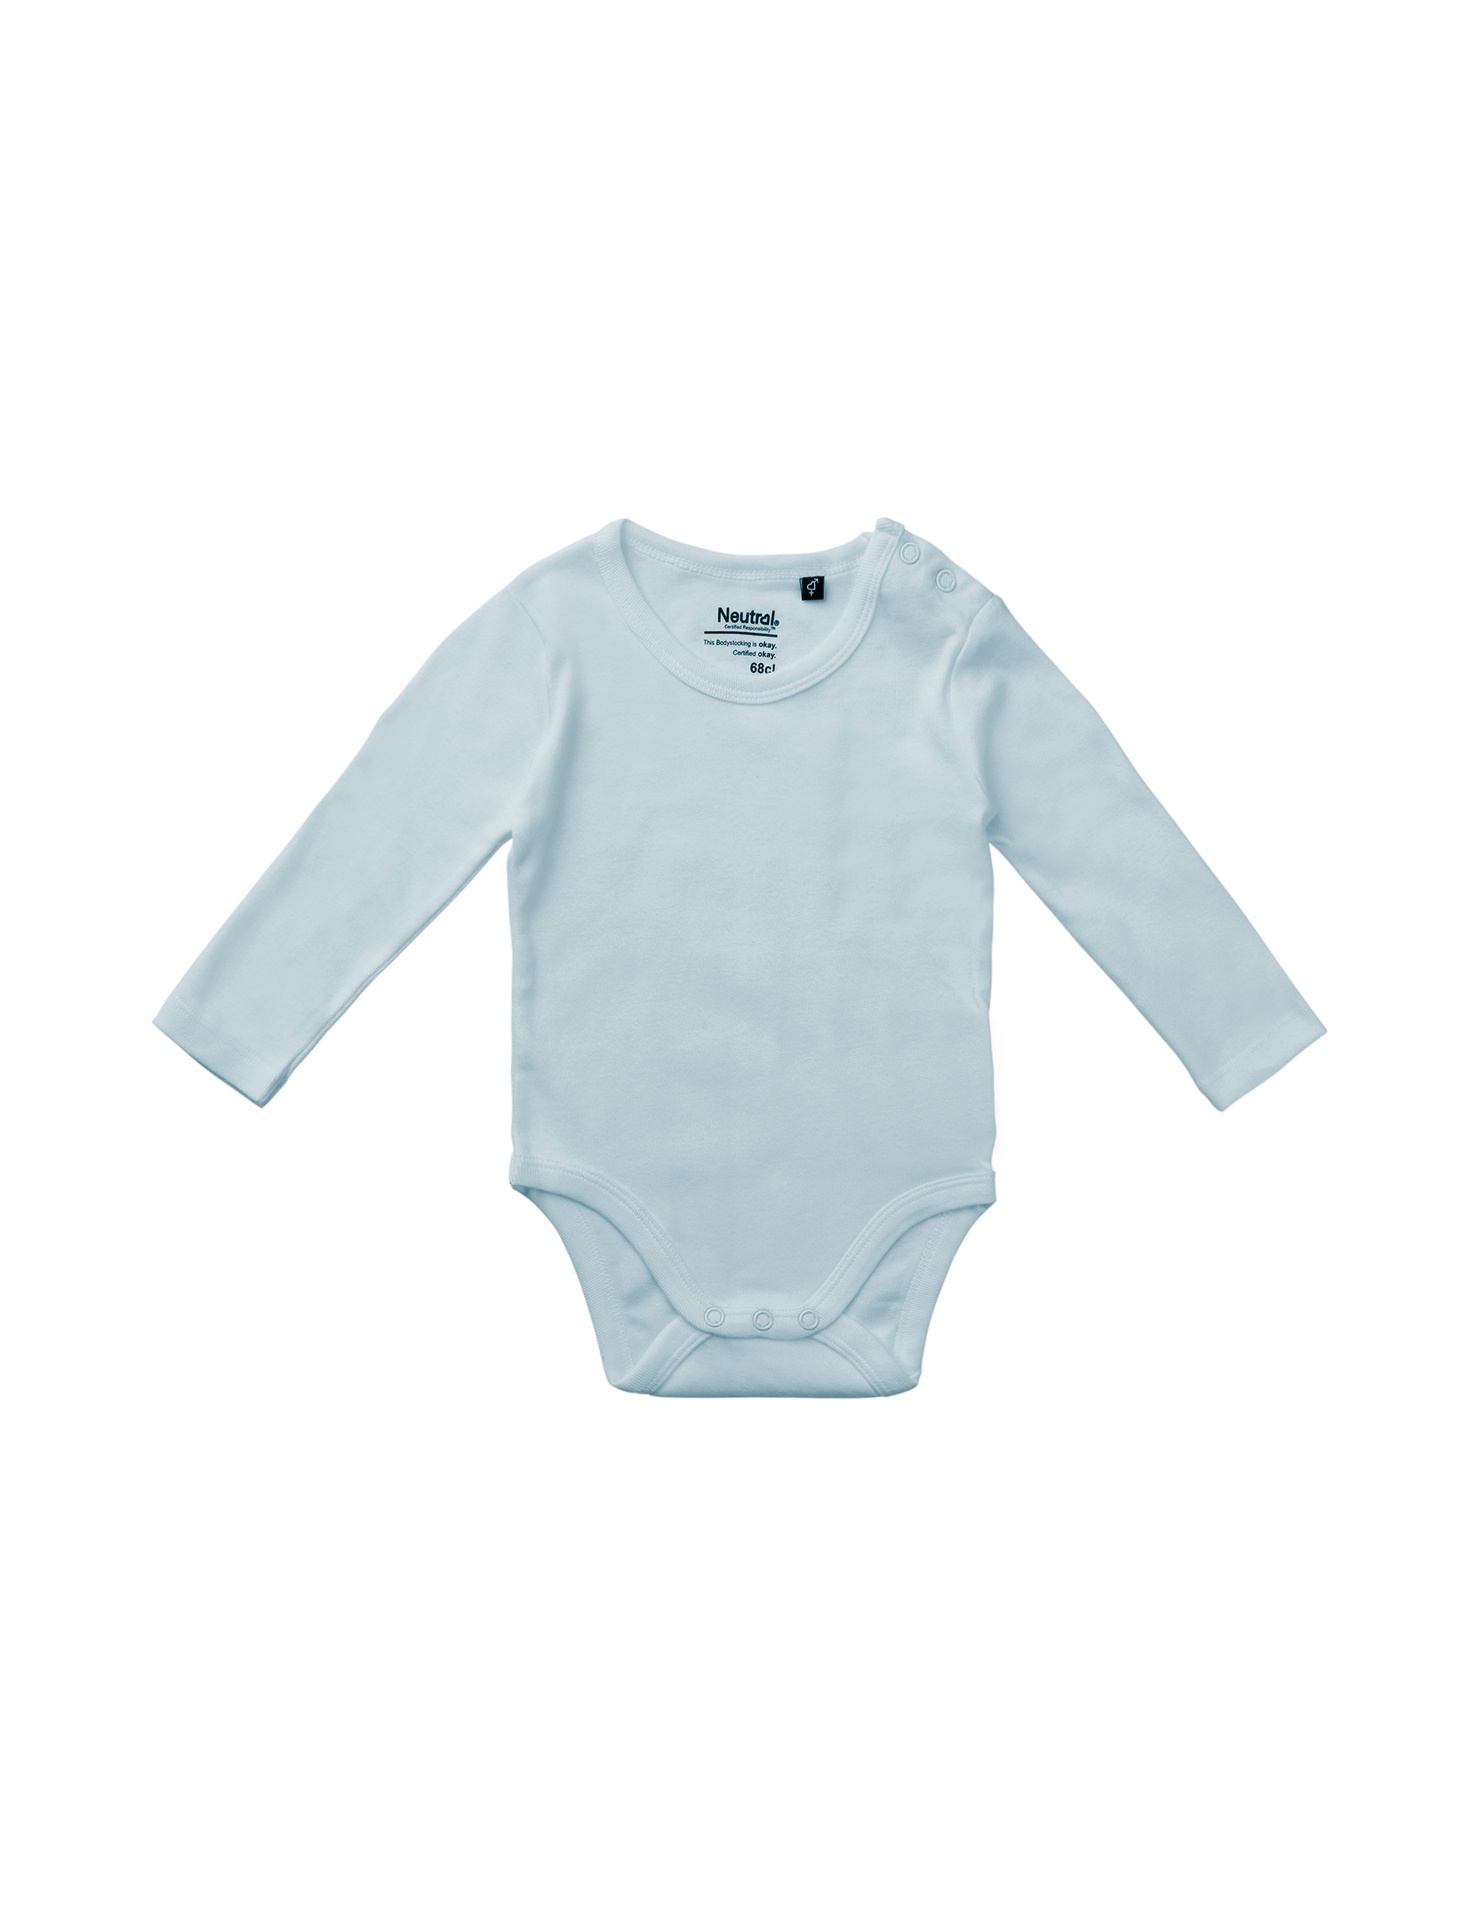 [PR/05758] Babies Long Sleeve Bodystocking (Light Blue 69, 80 cm)